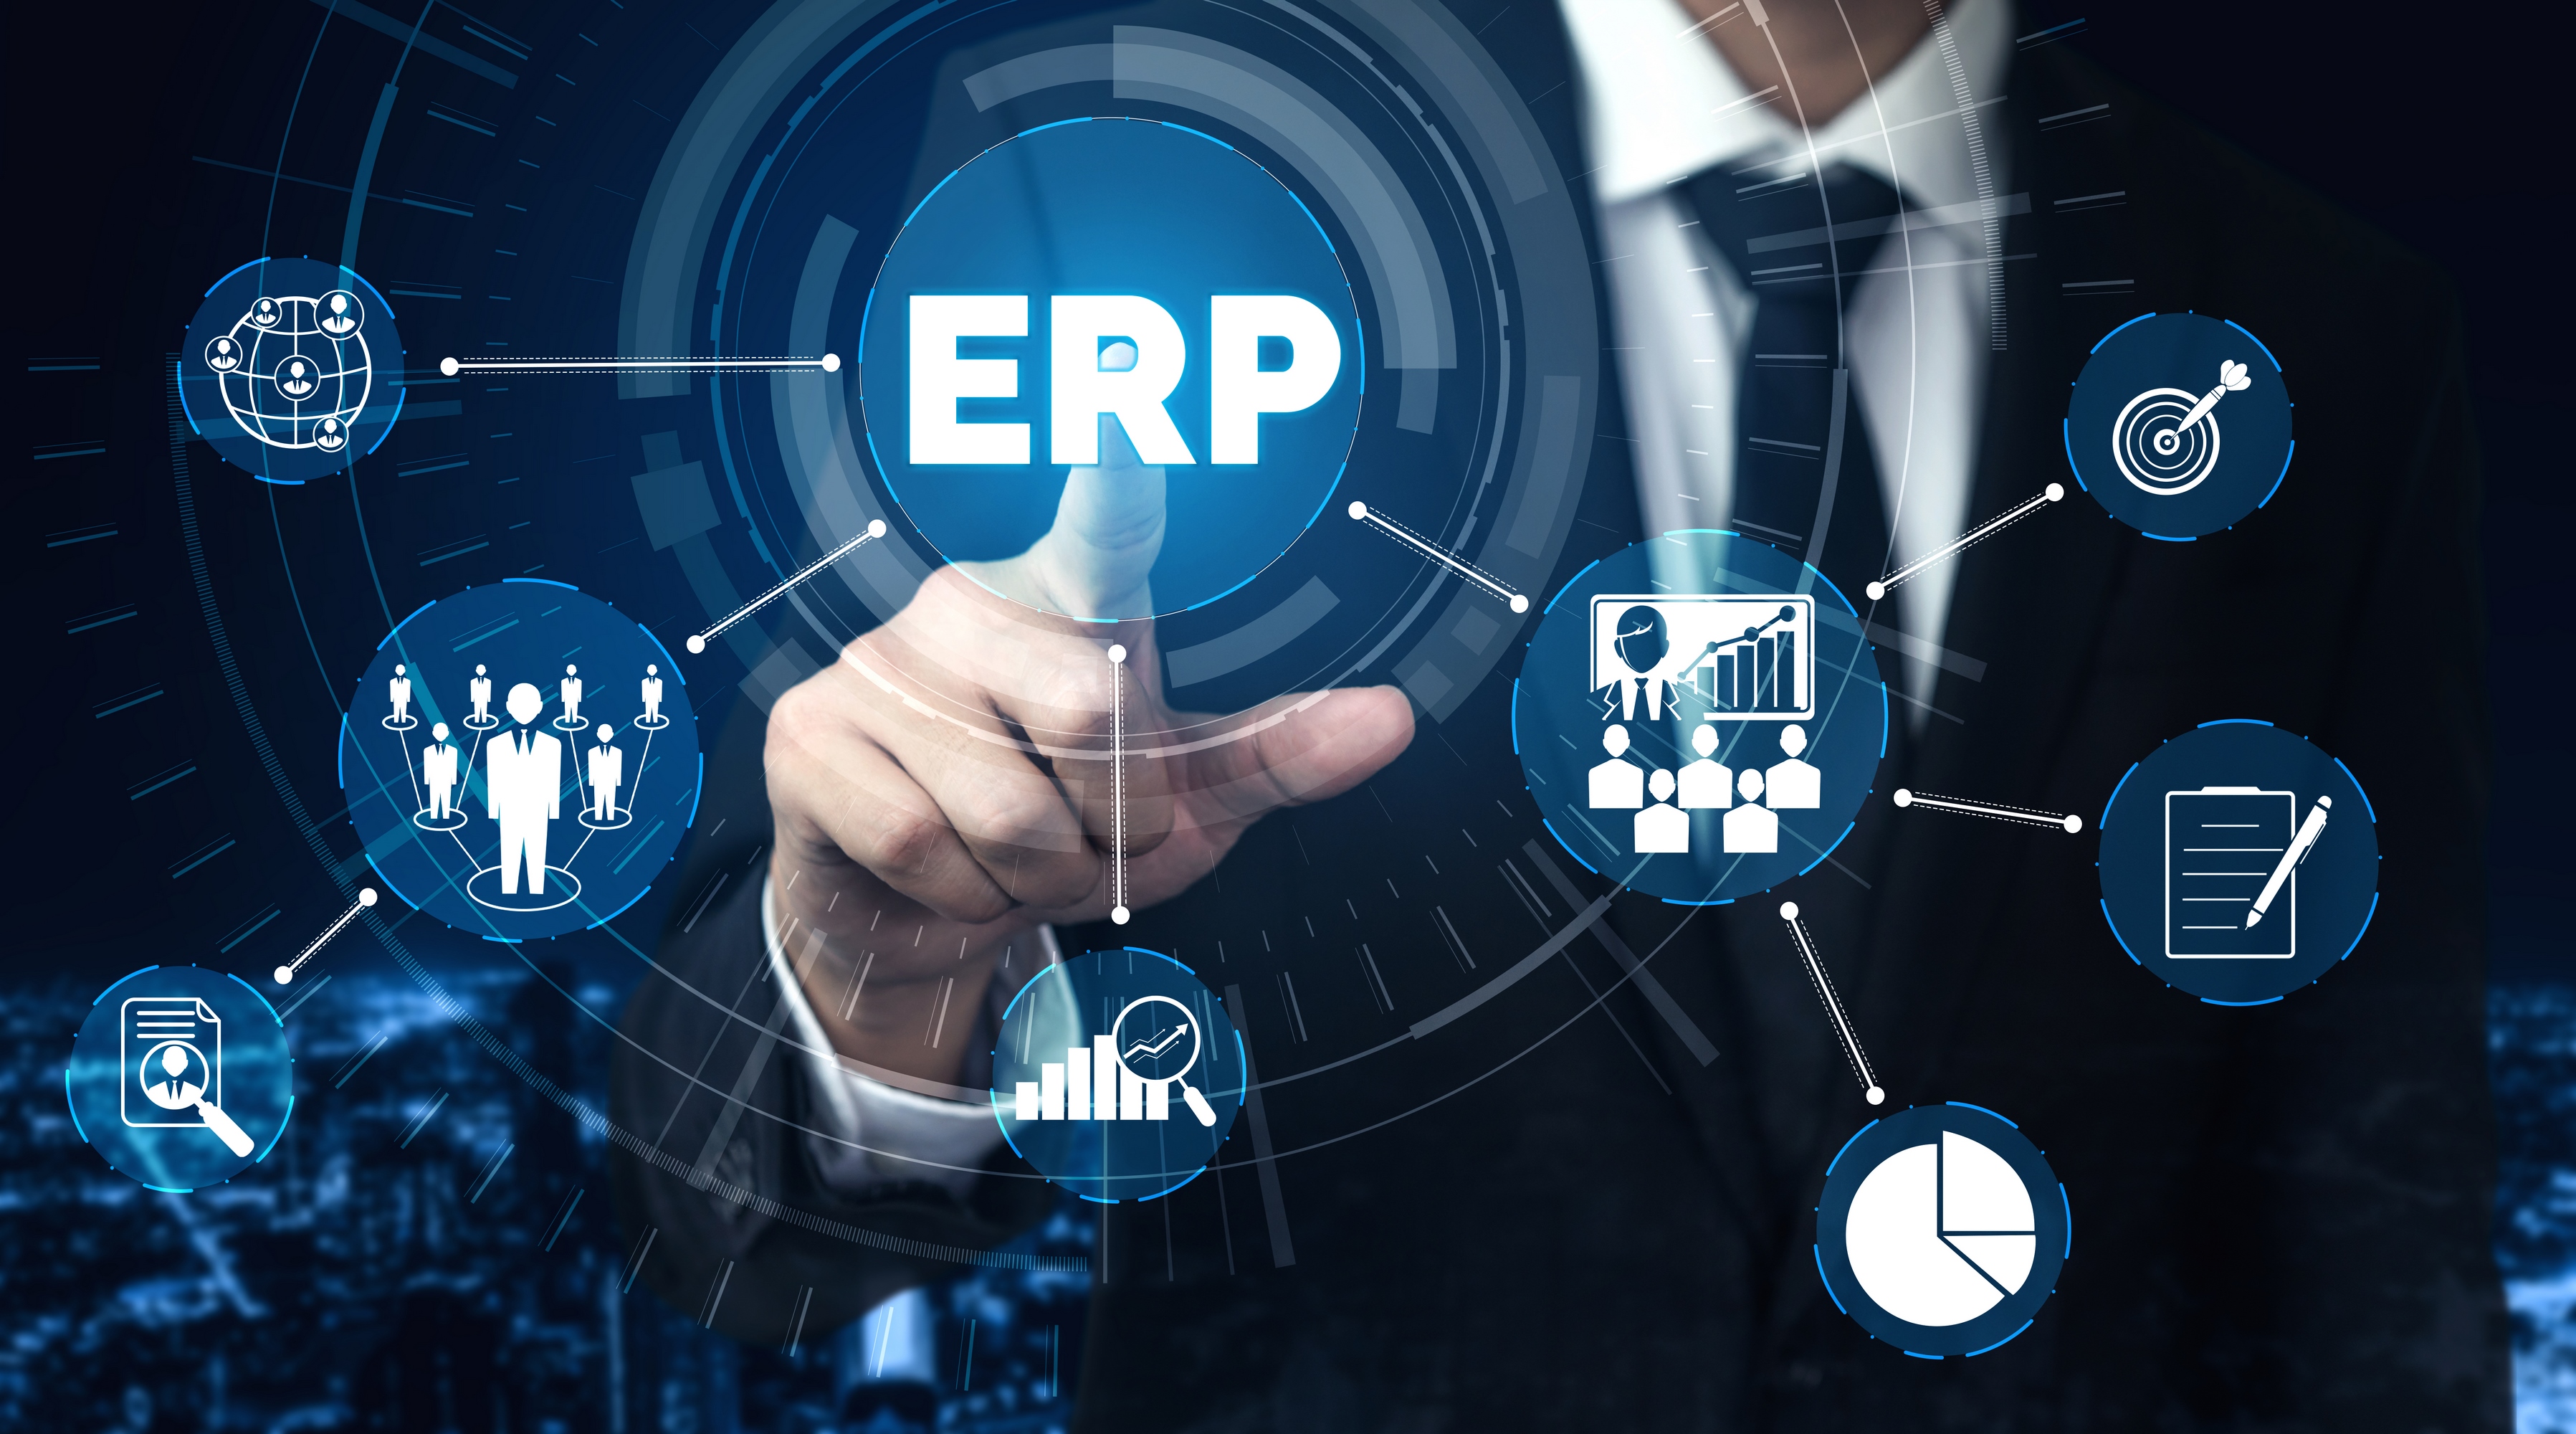 enterprise-resource-management-erp-software-system-for-business-resources-plan